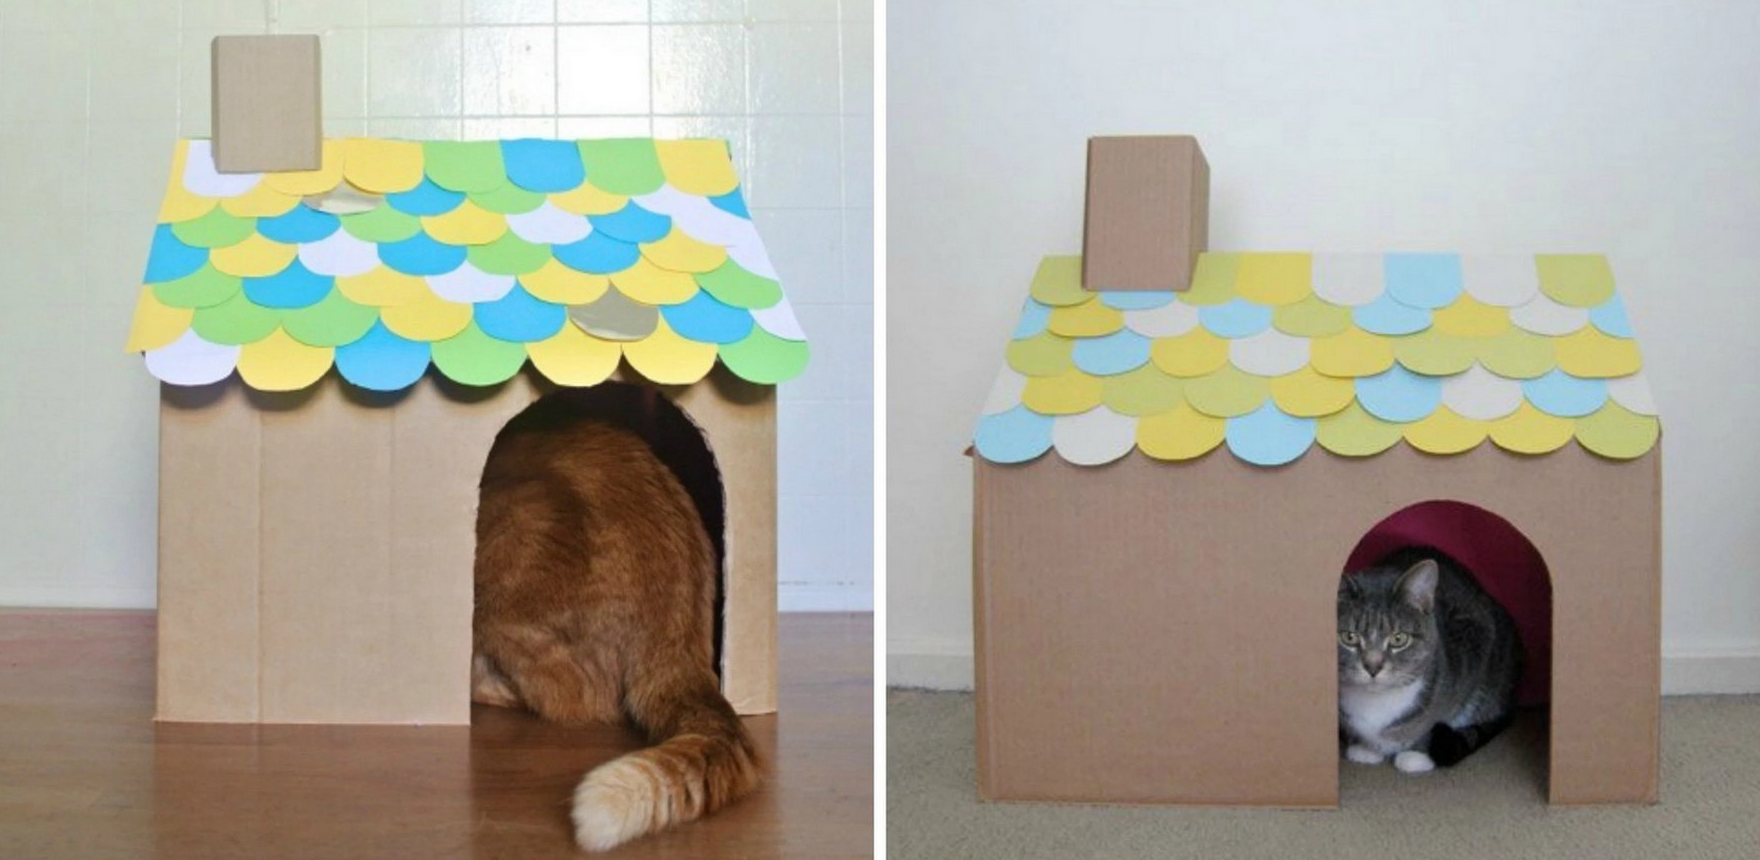 Домик для кошки из картона. Домик для кошки из картонной коробки. Дом для кошки из картона. Домик для котят из картона. Сделать домик для кошек из коробок